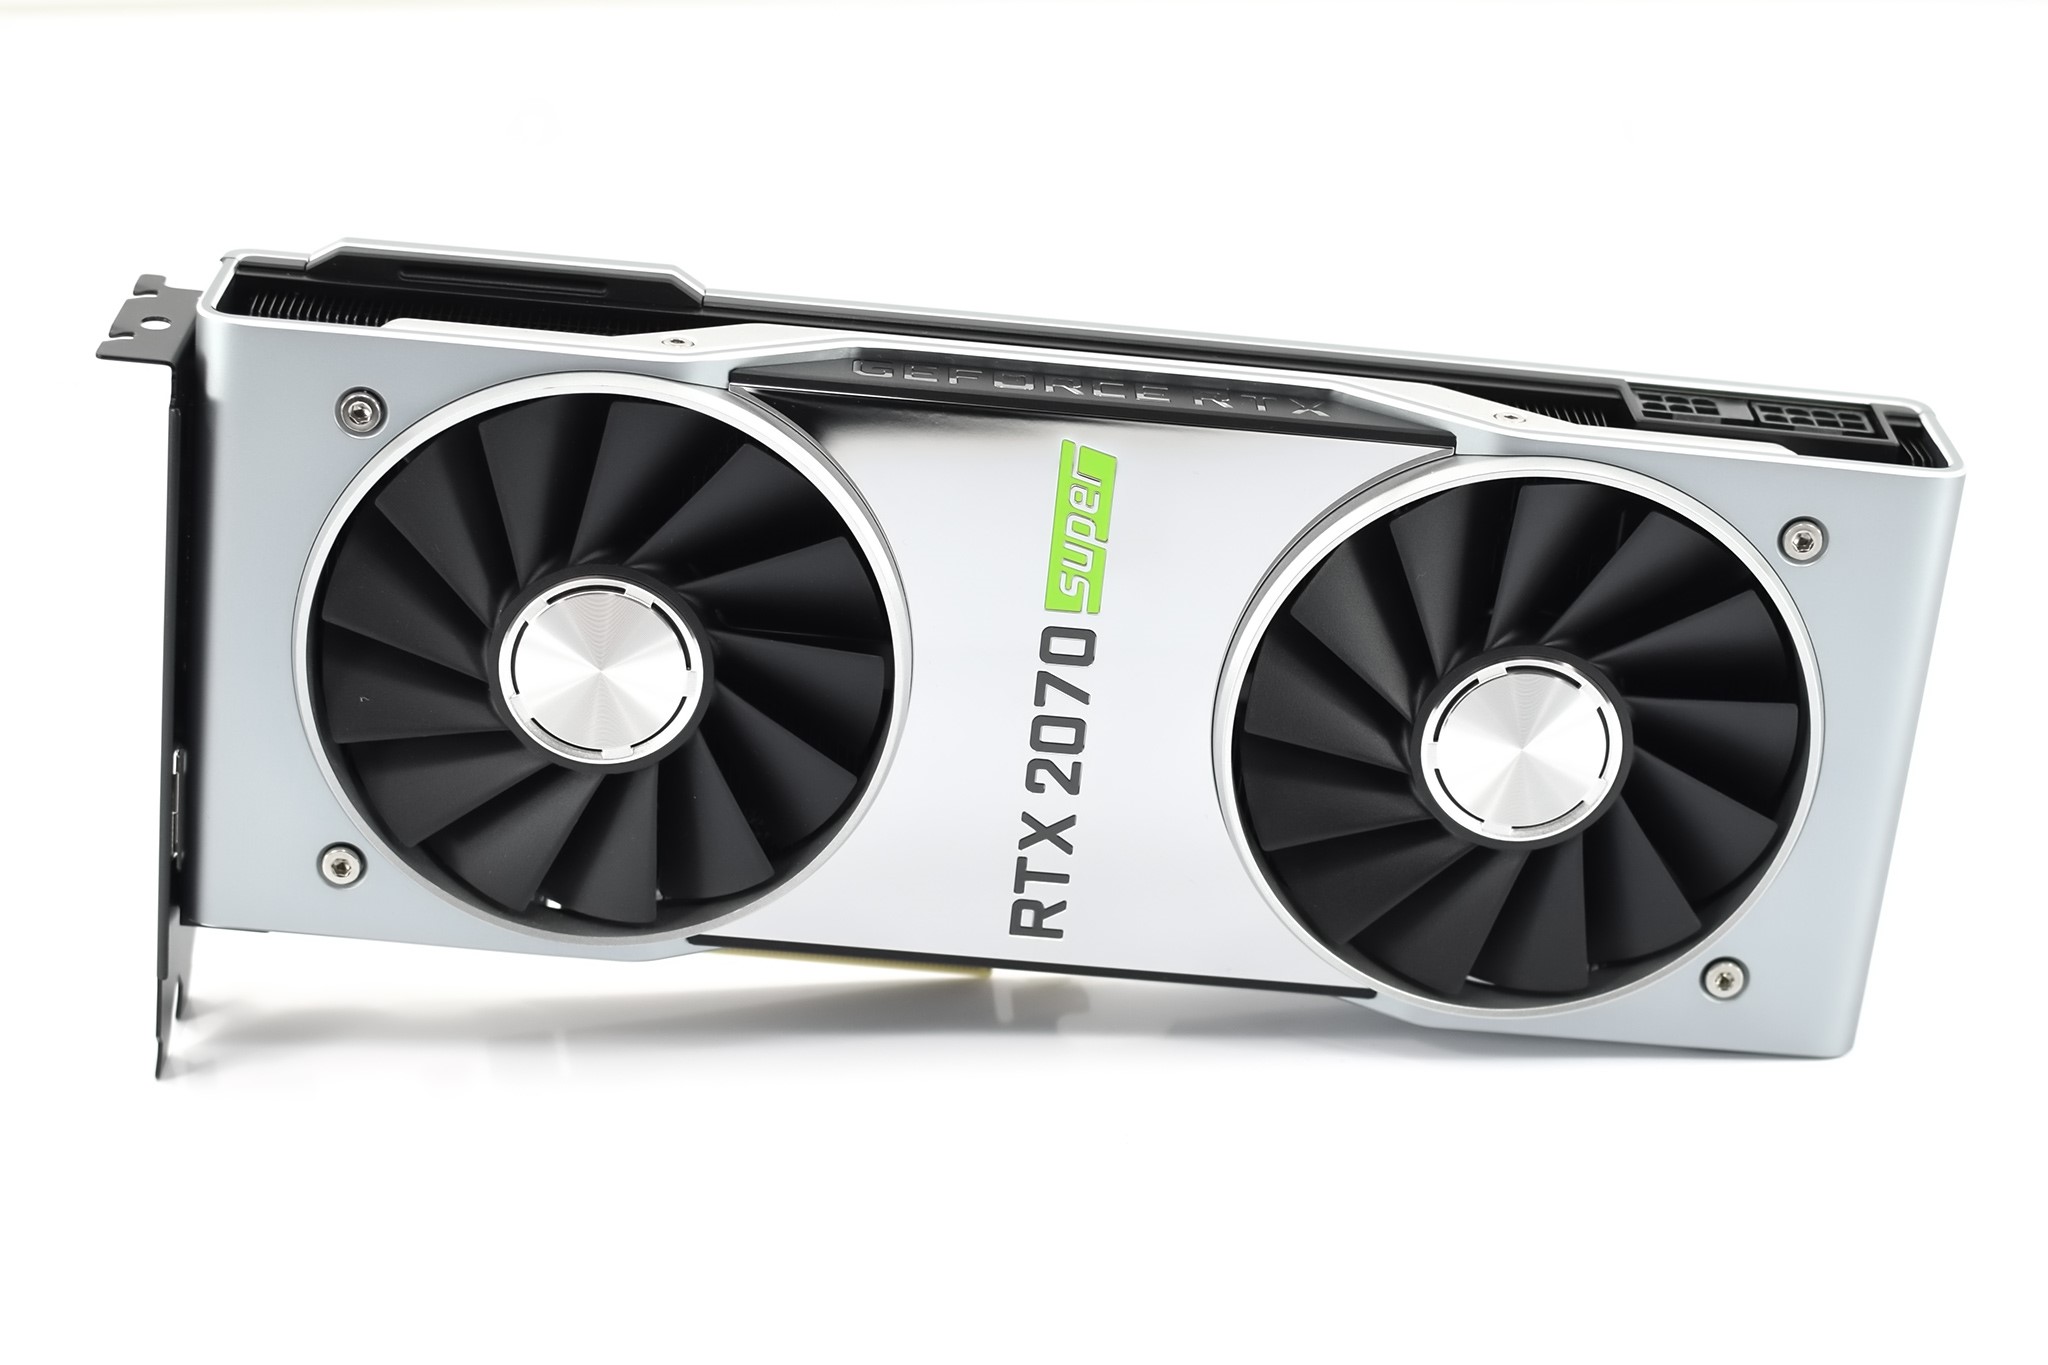 Nvidia RTX Super series pricing, specs and release dates | KitGuru